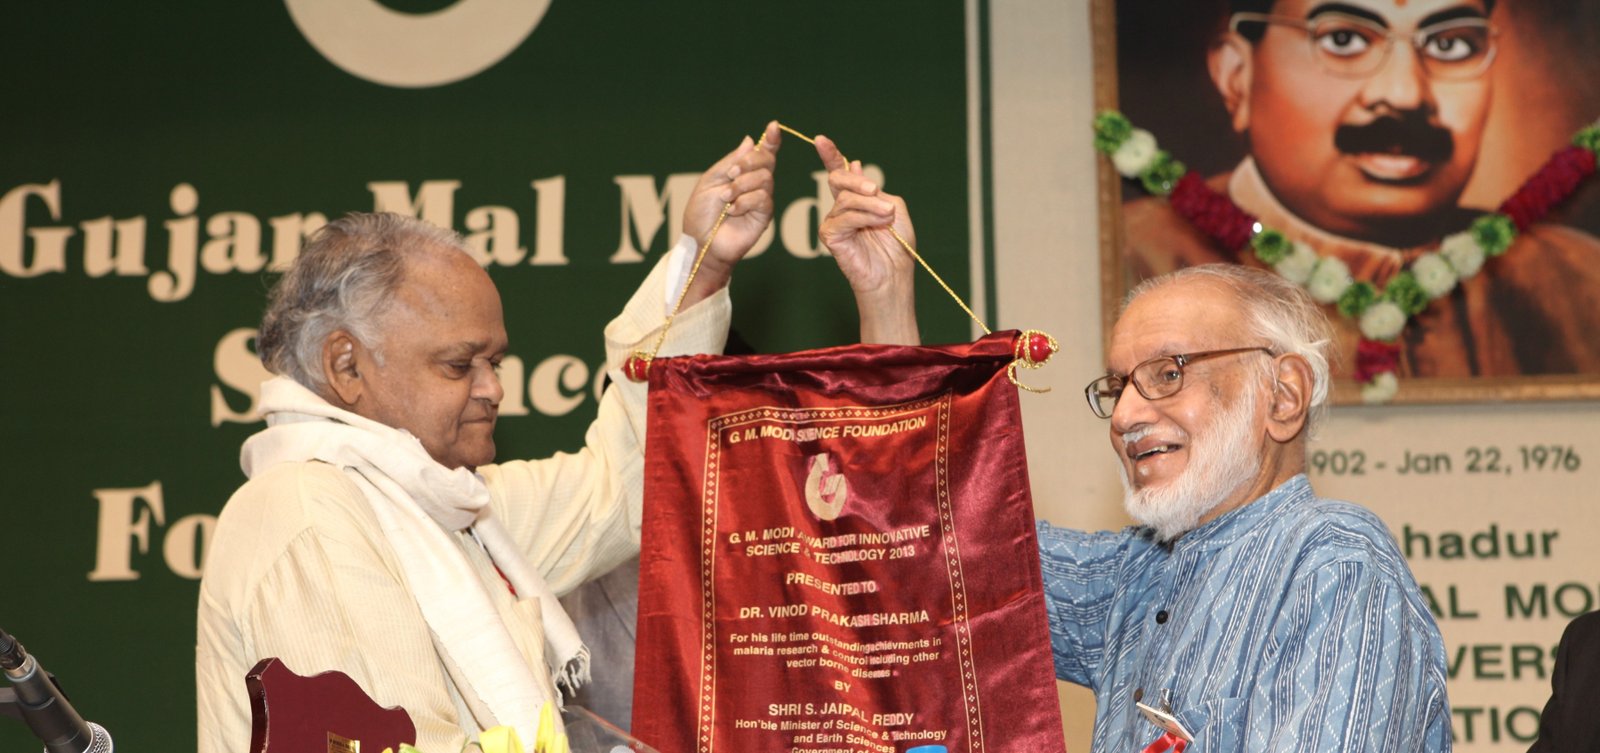 Dr Vinod Prakash Sharma receiving Gujar Mal Modi Award for Innovative Science & Technology 2013 from Prof G K Menon, former chairman, ISRO.